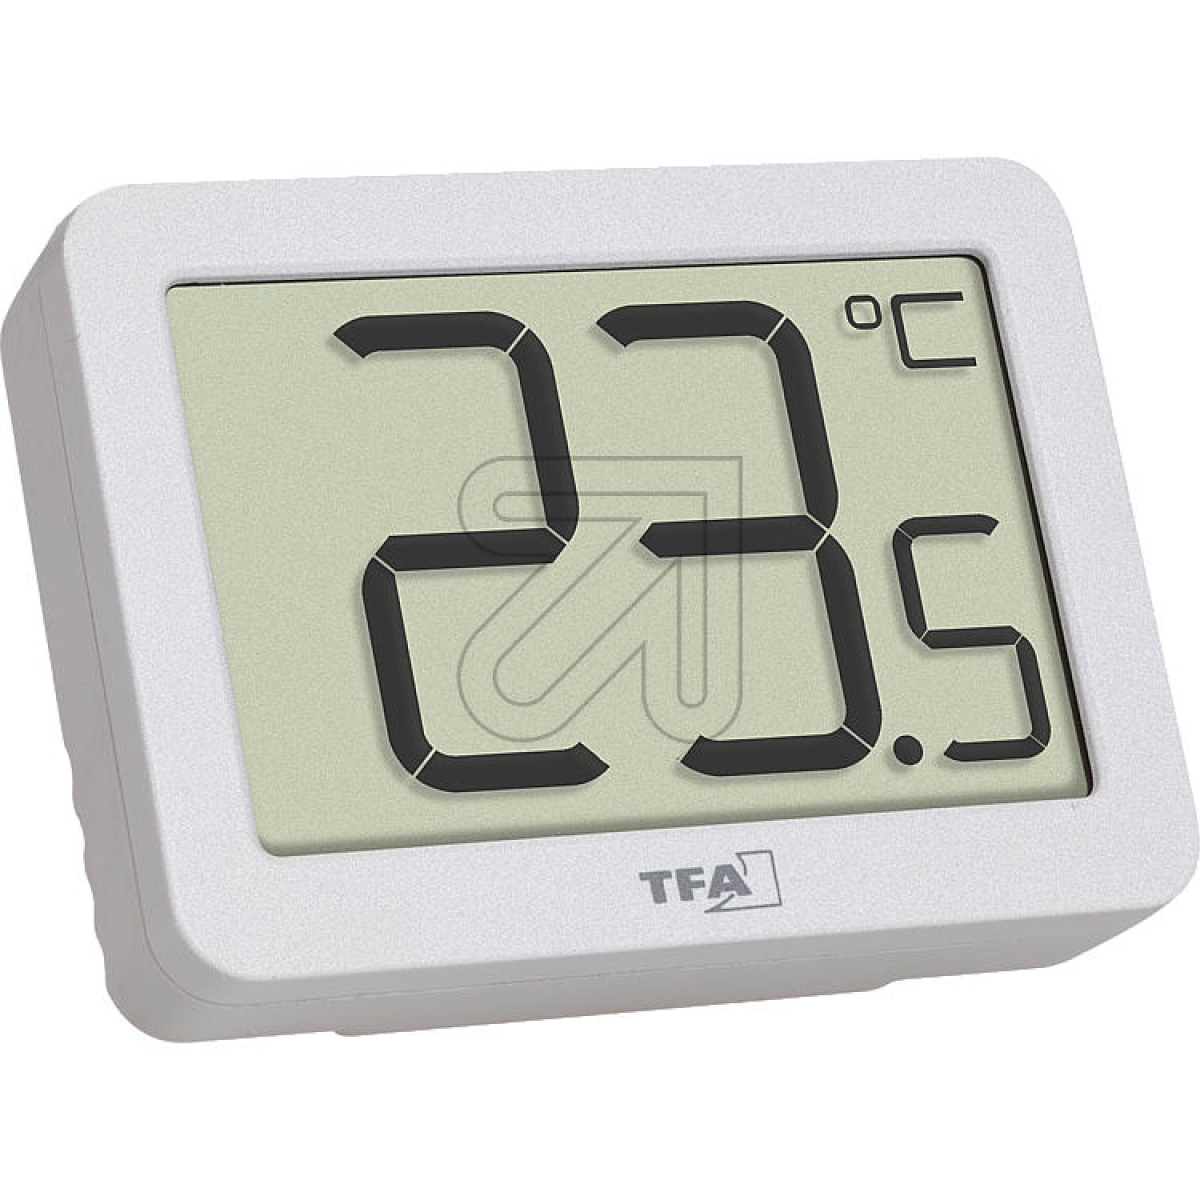 TFADigital thermometer 30.1065.02Article-No: 473205